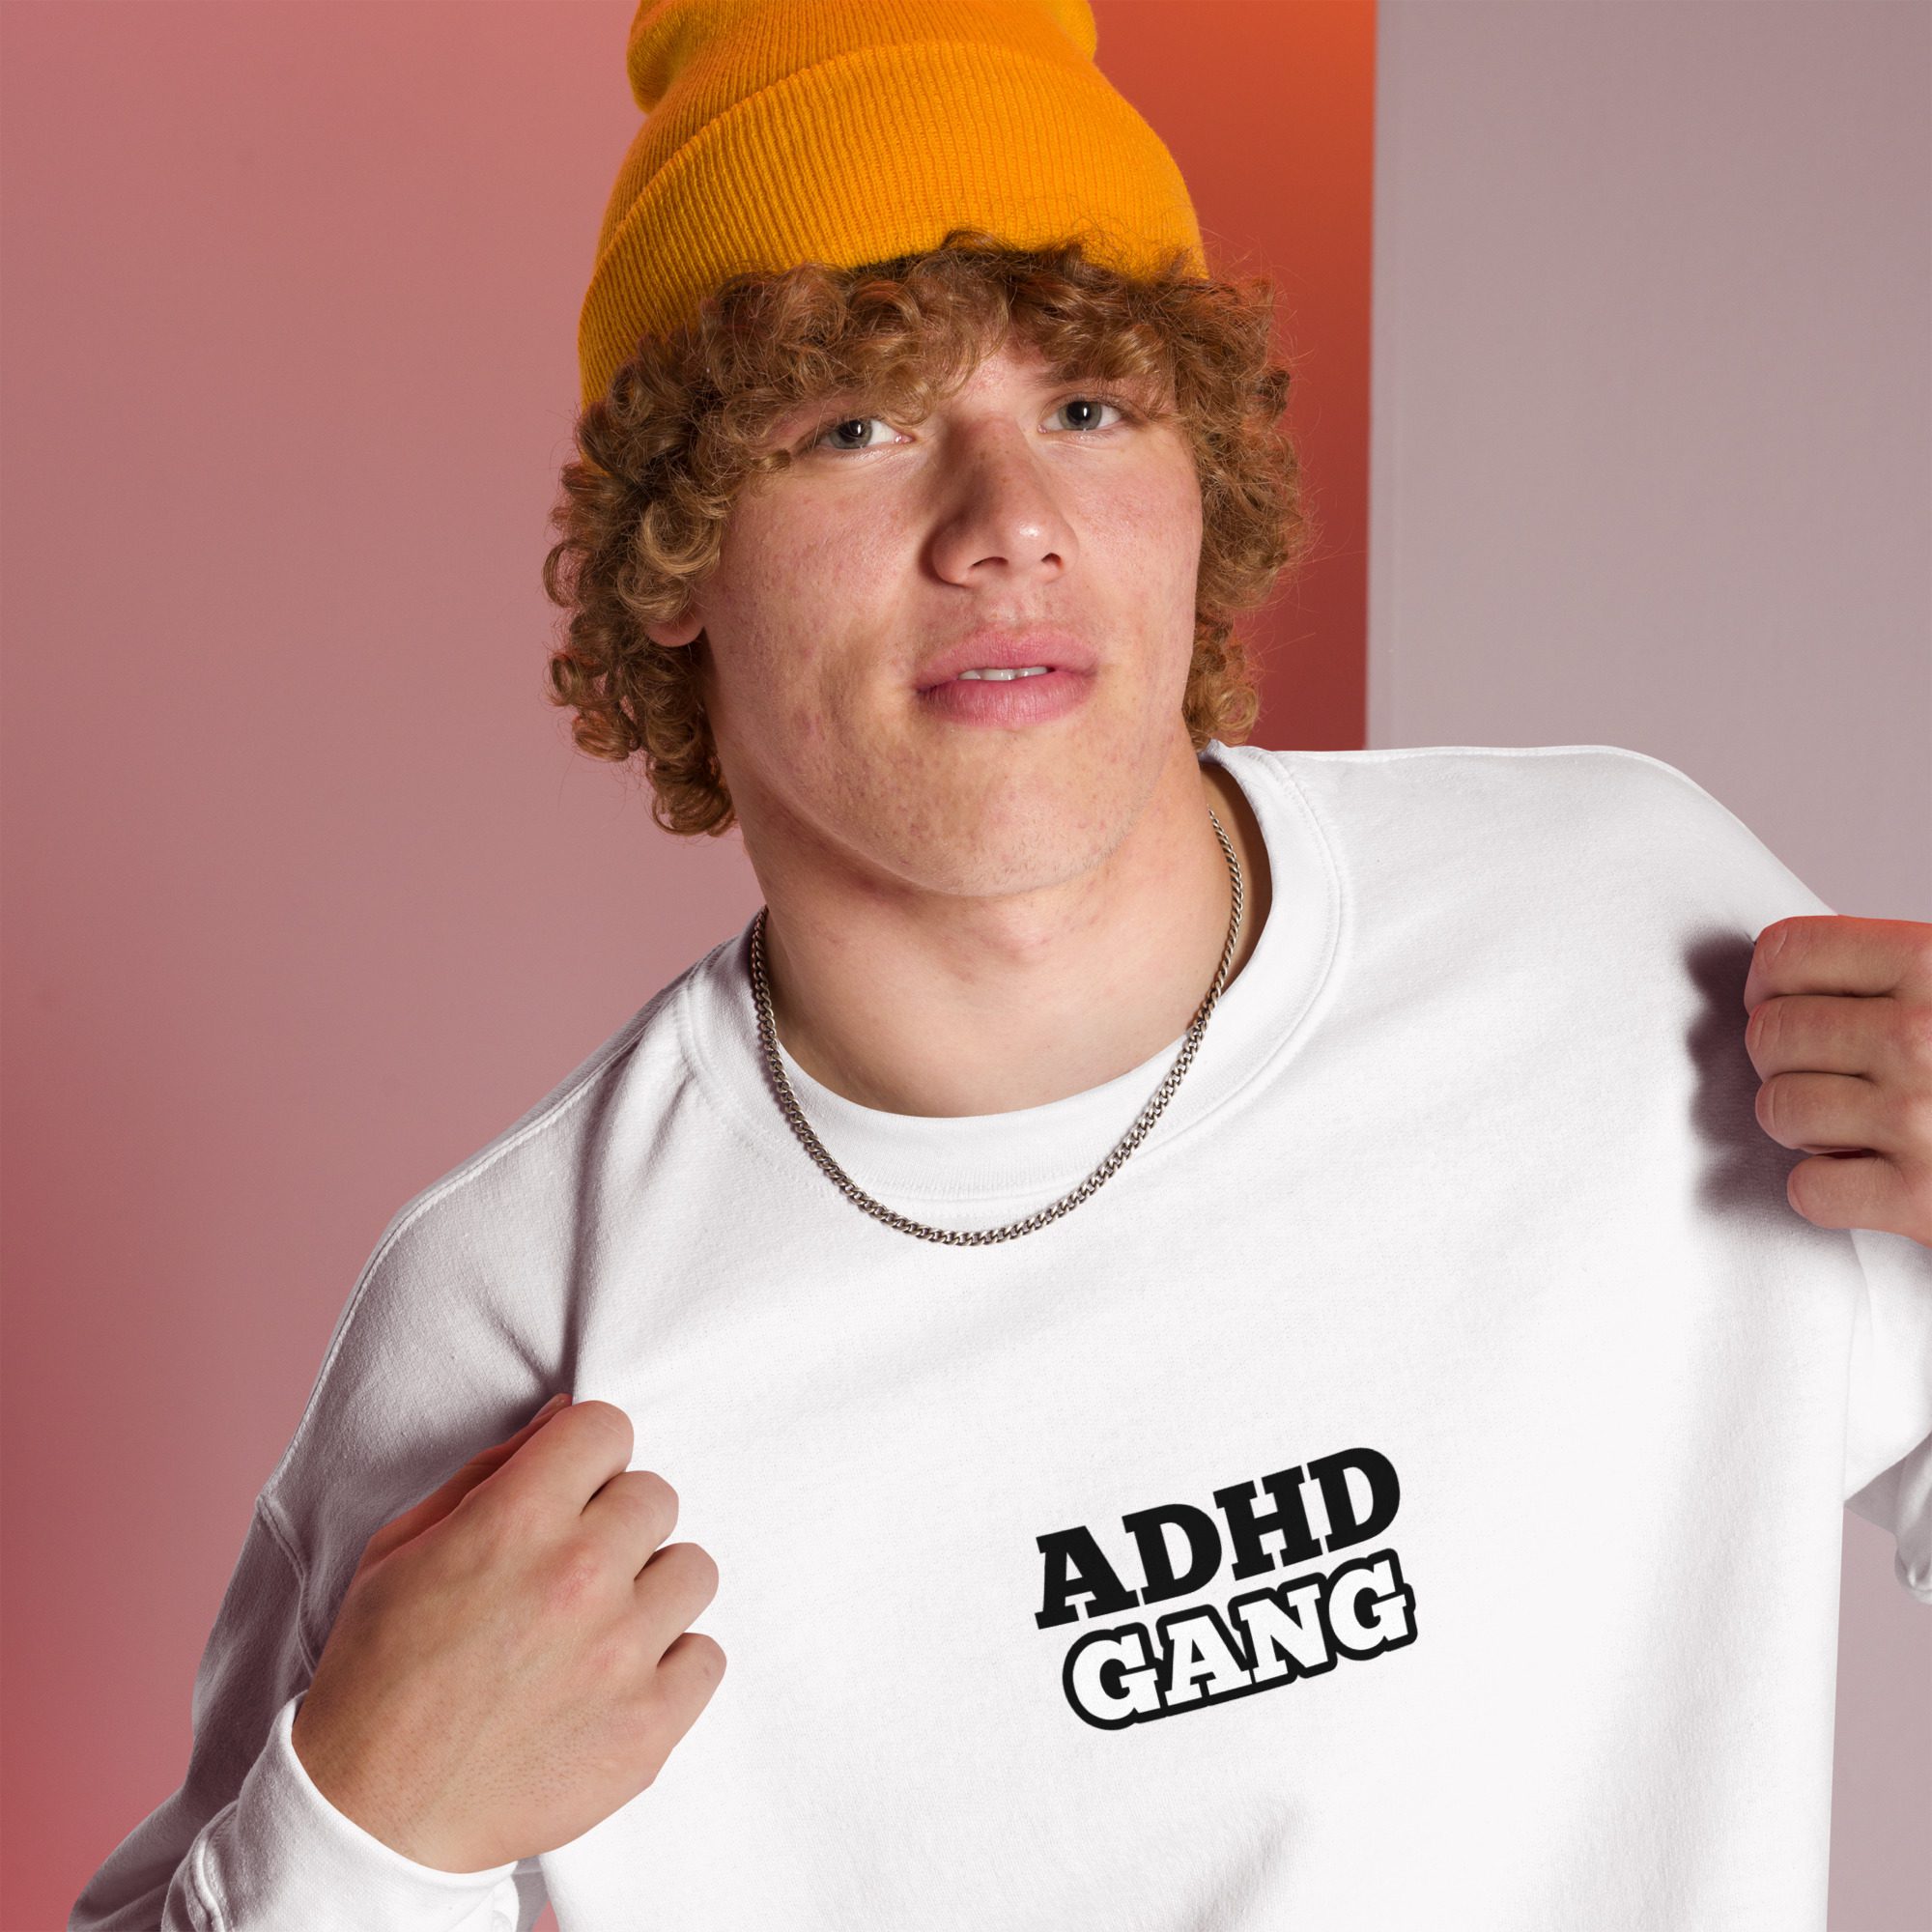 ADHD Gang Unisex Sweatshirt